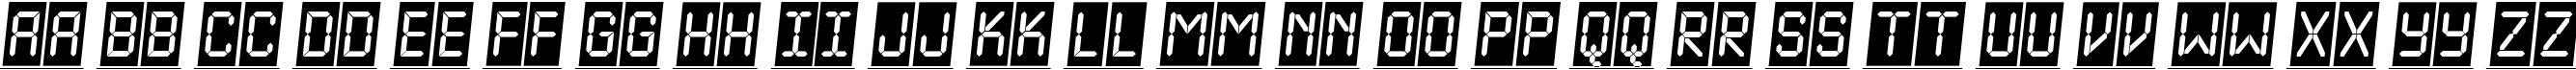 Пример написания английского алфавита шрифтом a_LCDNovaCmFrObl